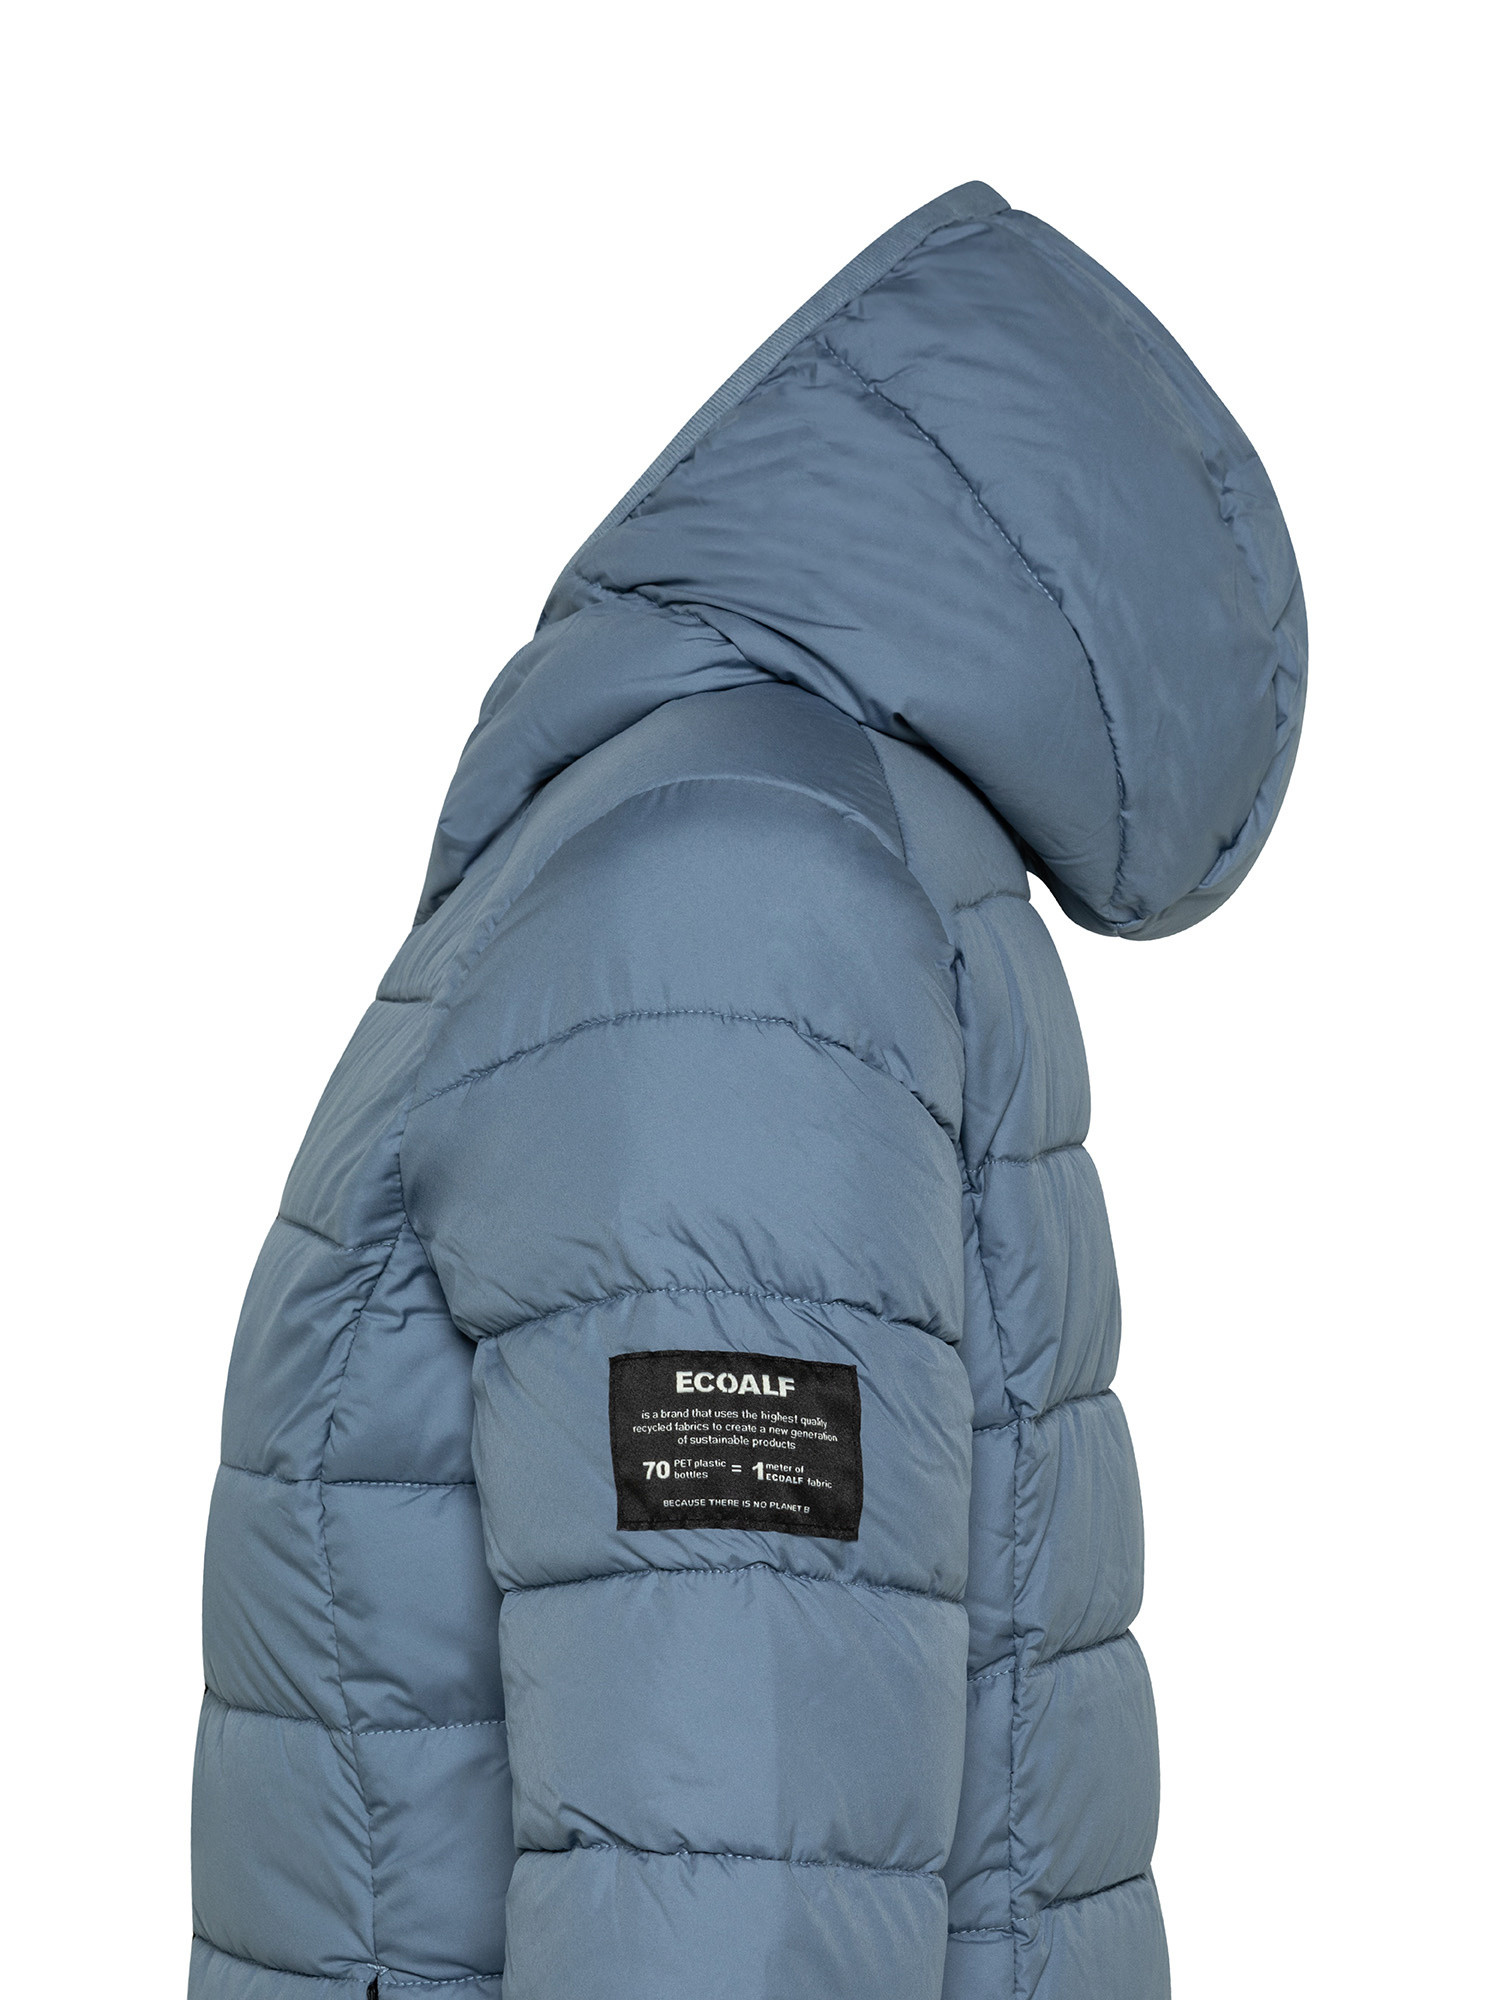 Ecoalf - Waterproof Asp down jacket with logo, Blue Dark, large image number 2